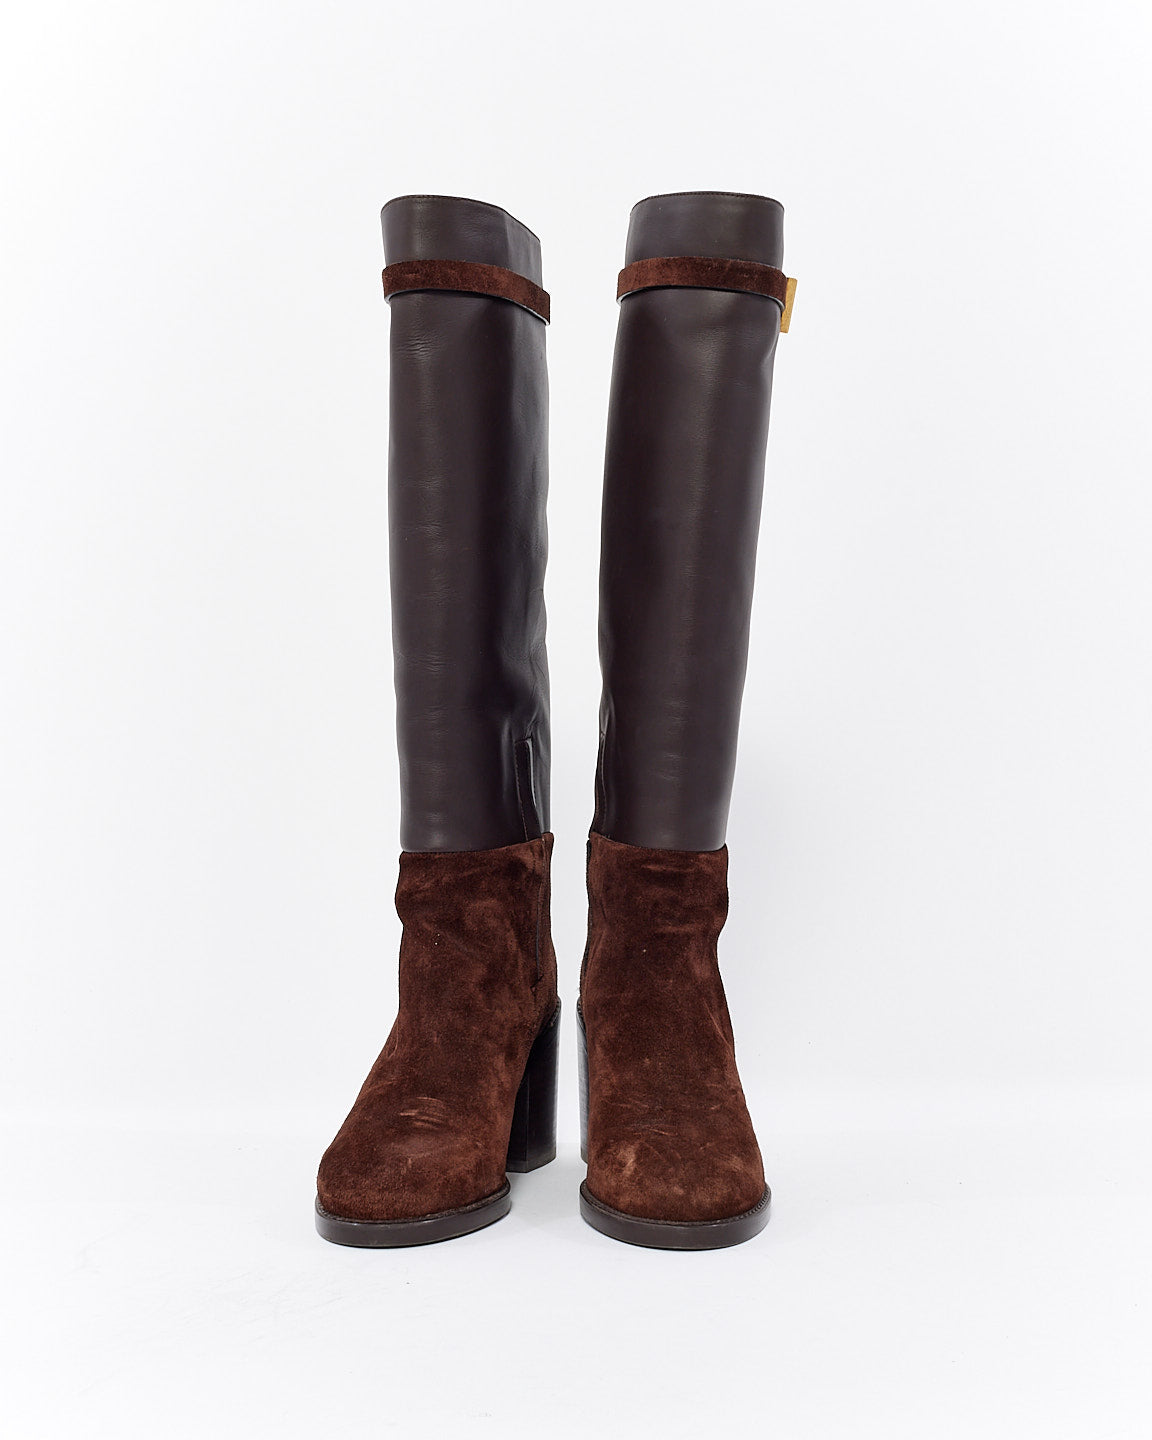 Stuart Weitzman Brown Suede & Leather Knee High Boots - 5.5